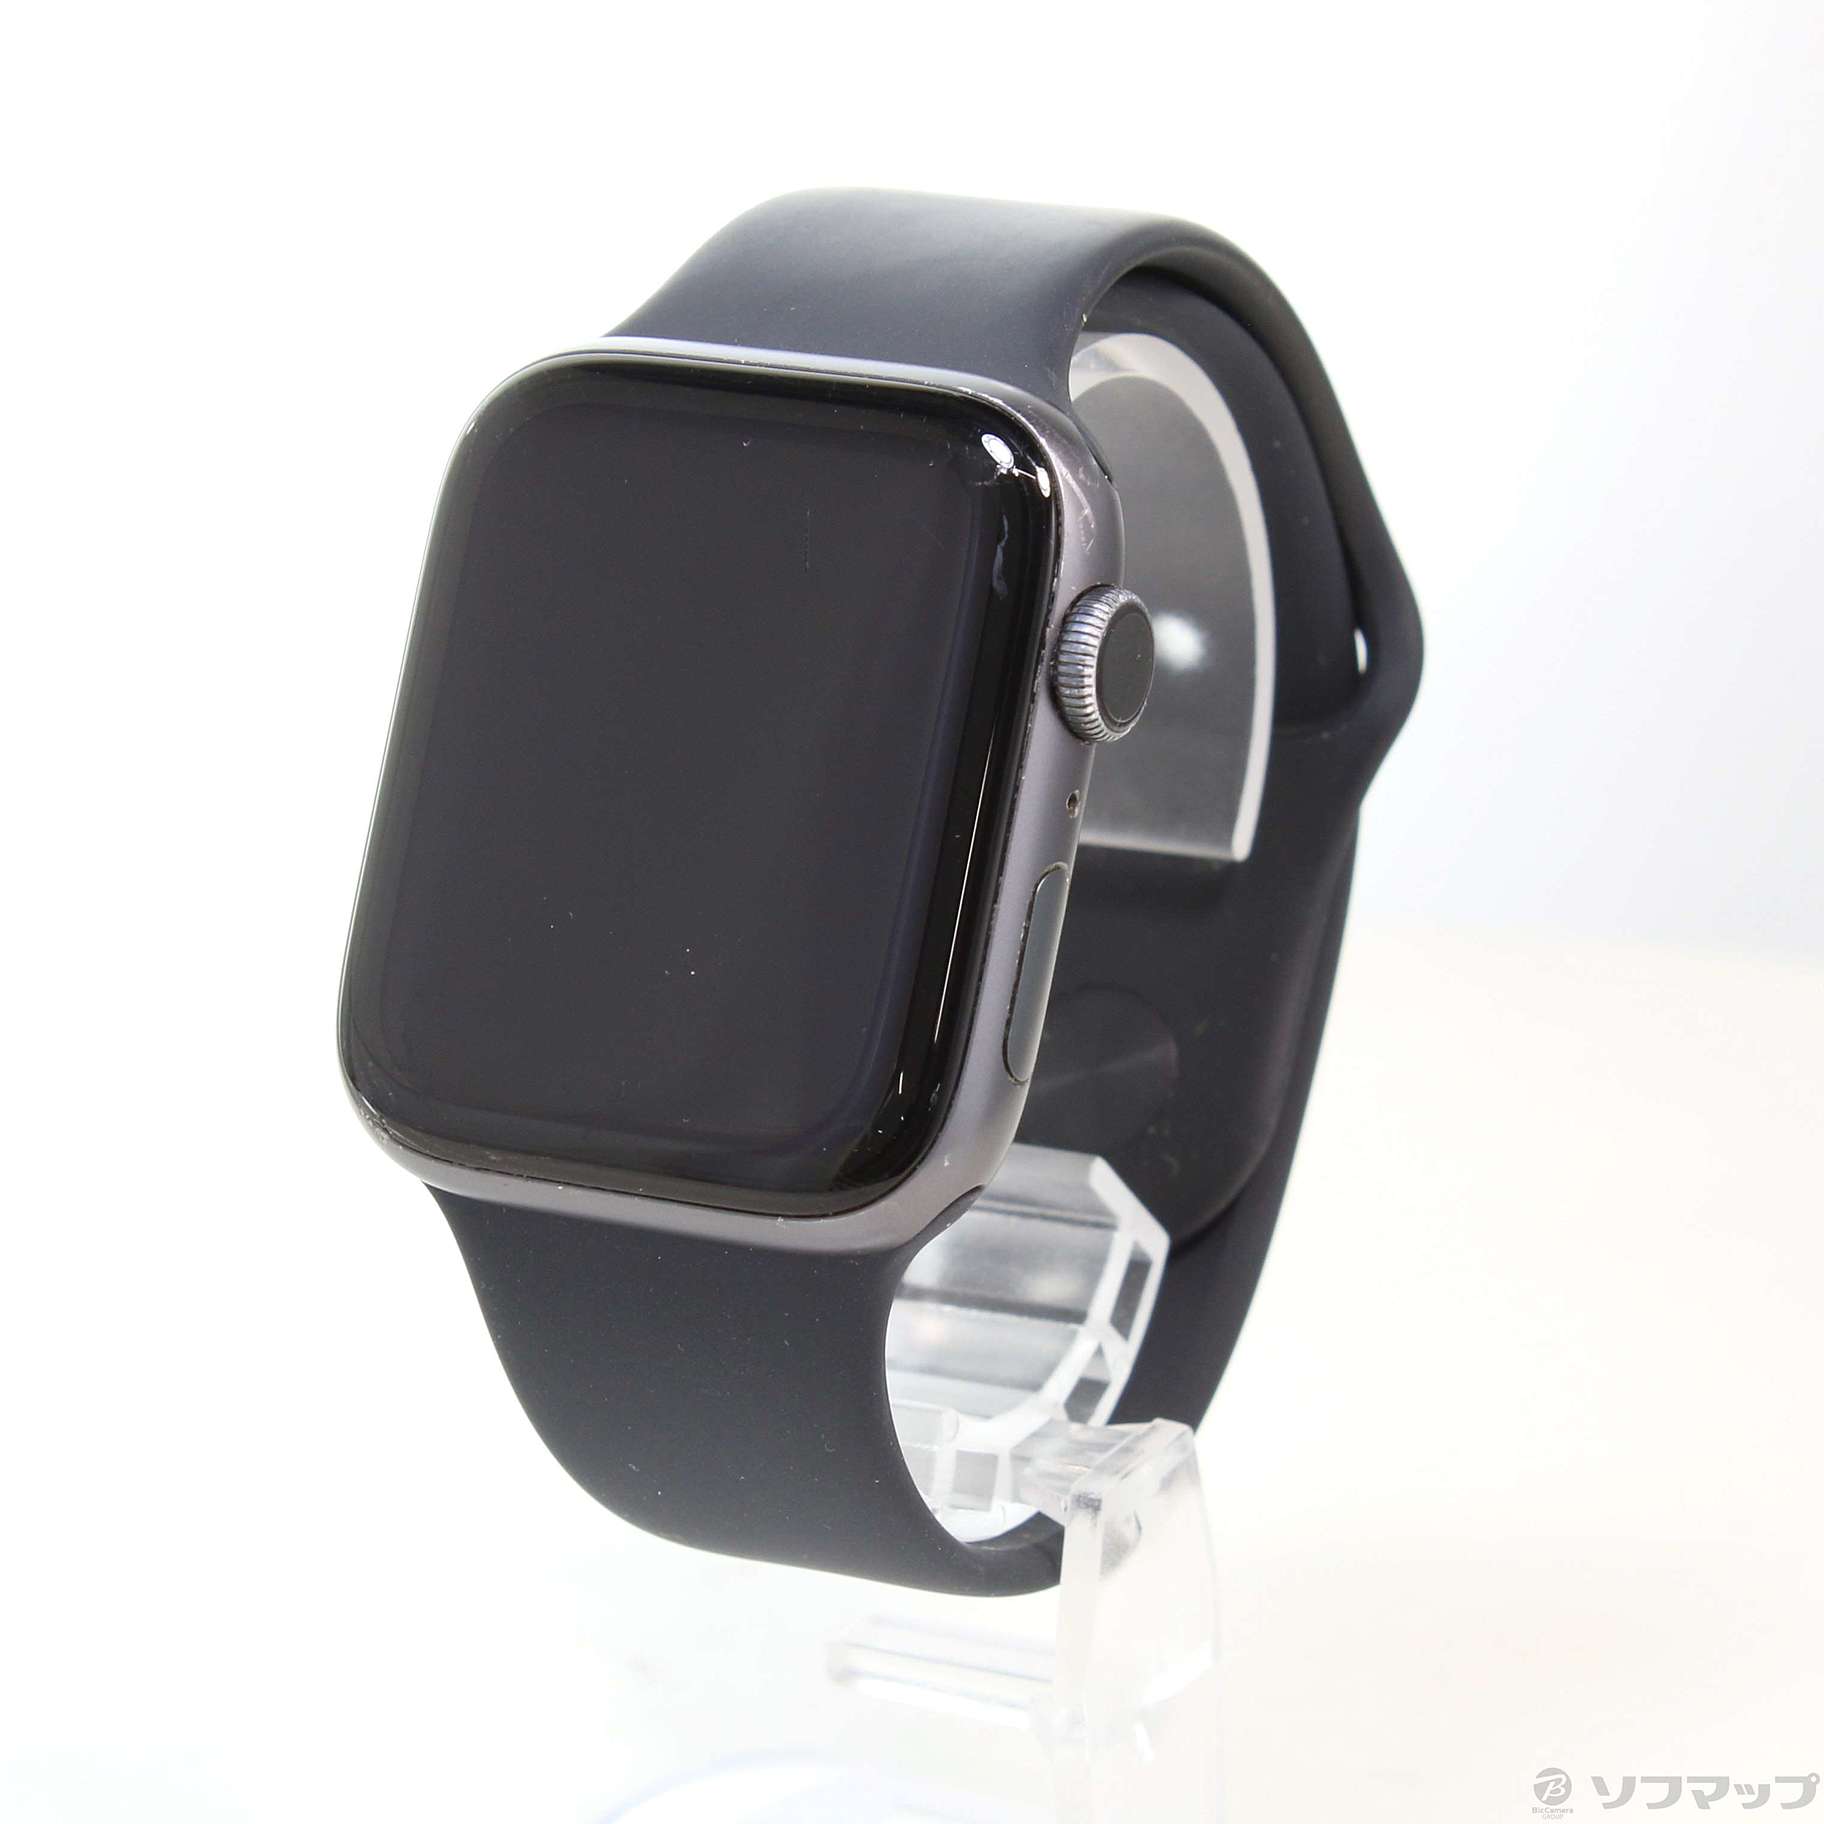 Apple Watch series 4 GPS space gray 44mm